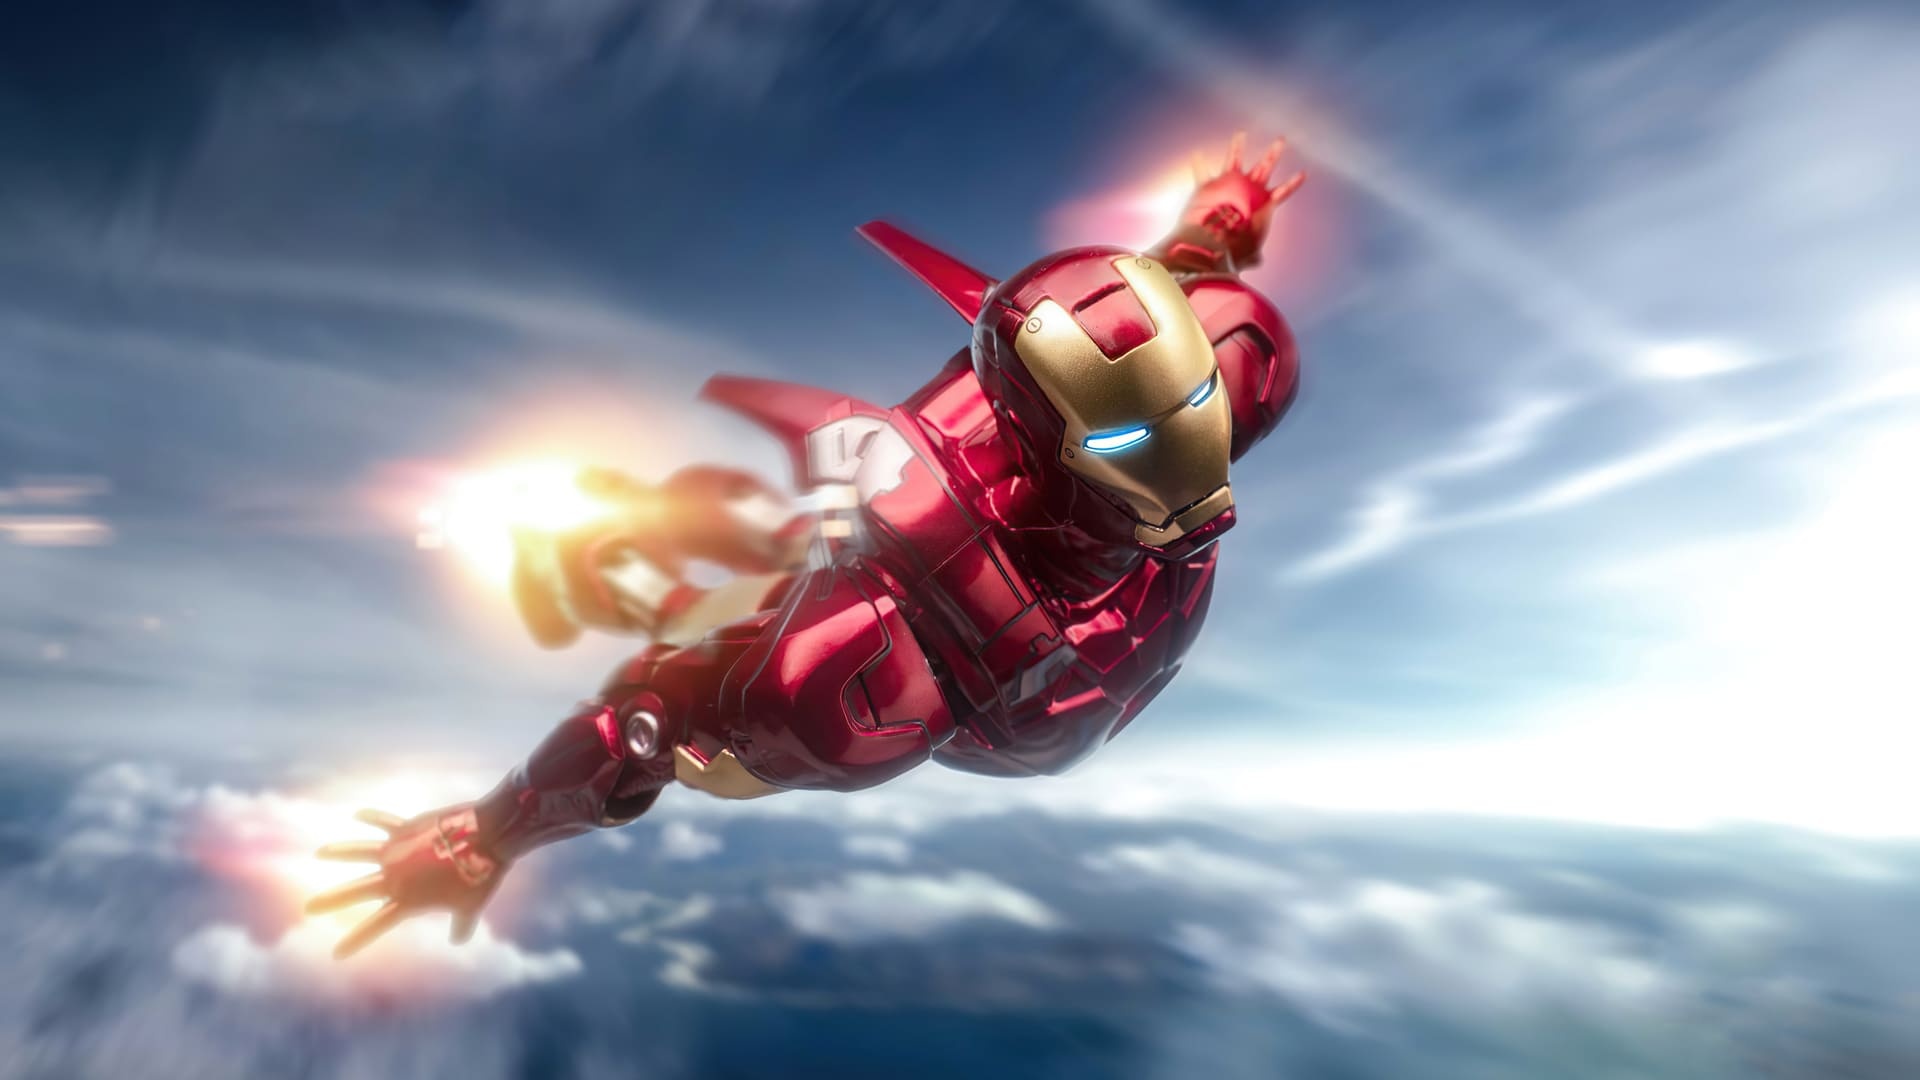 Iron Man: Tony Stark's armors, Suits, Fictional character. 1920x1080 Full HD Wallpaper.